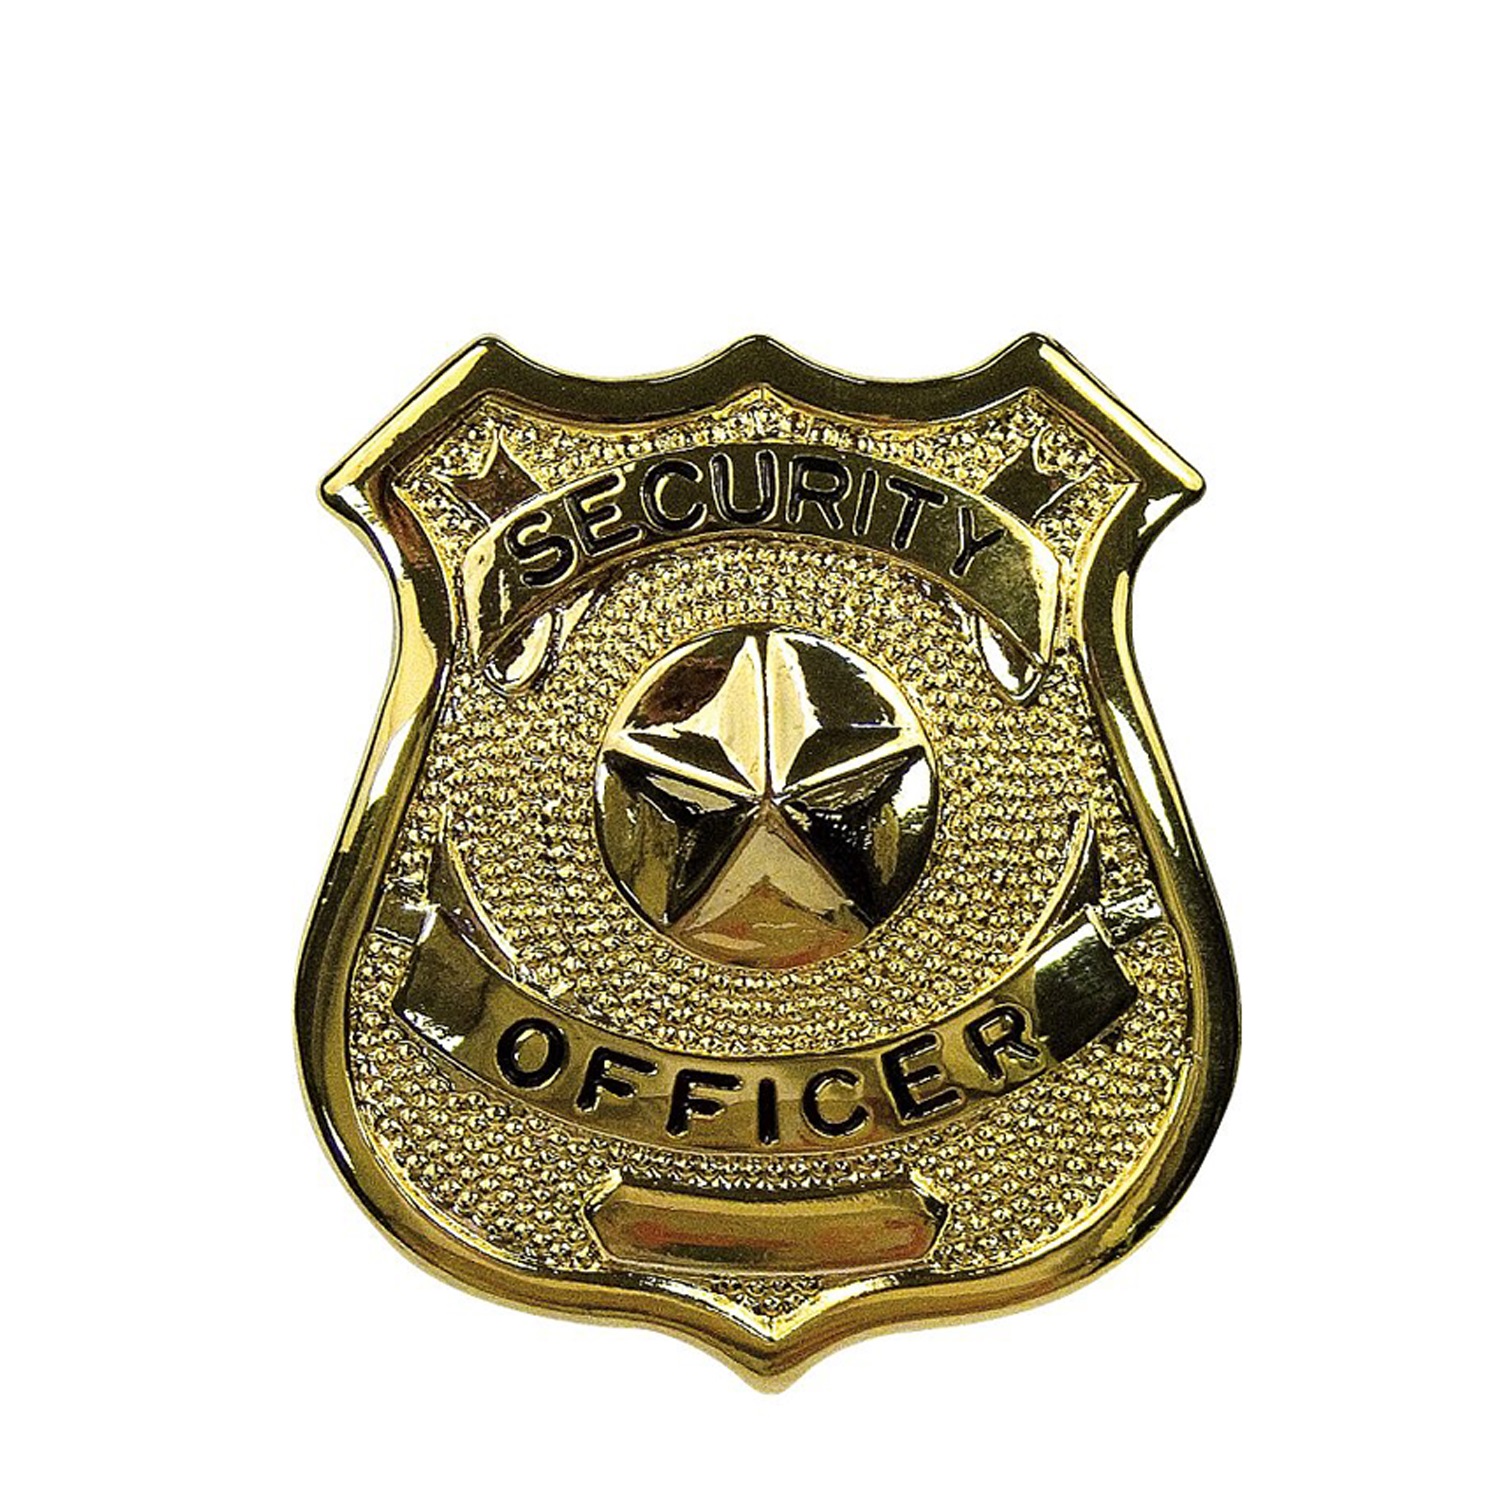 Security Guard Badge gold